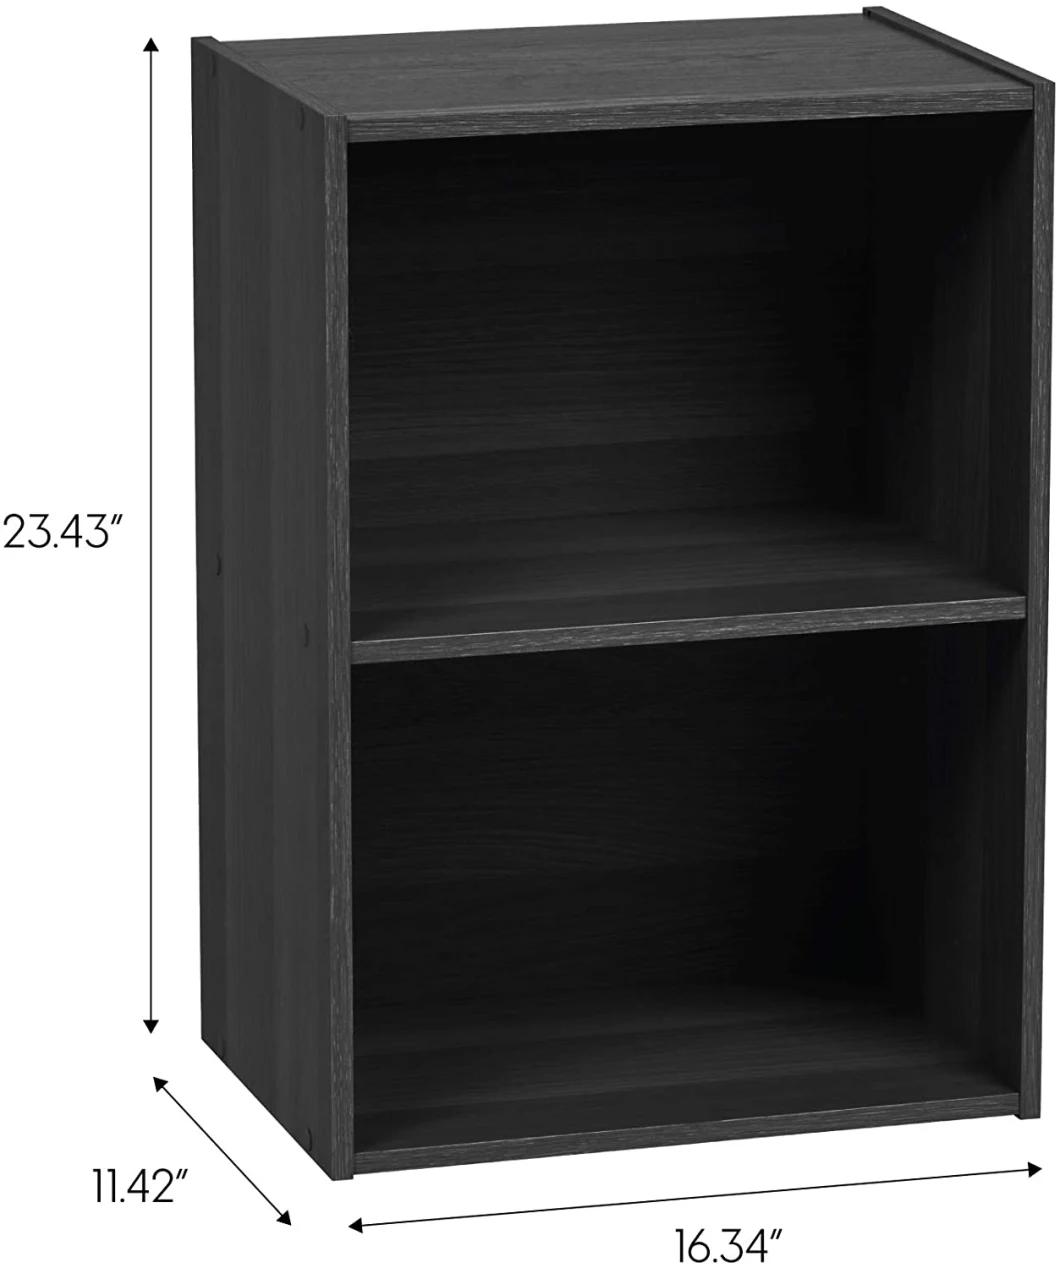 Modern Wooden 2-Tiers Bookshelf for Home Office